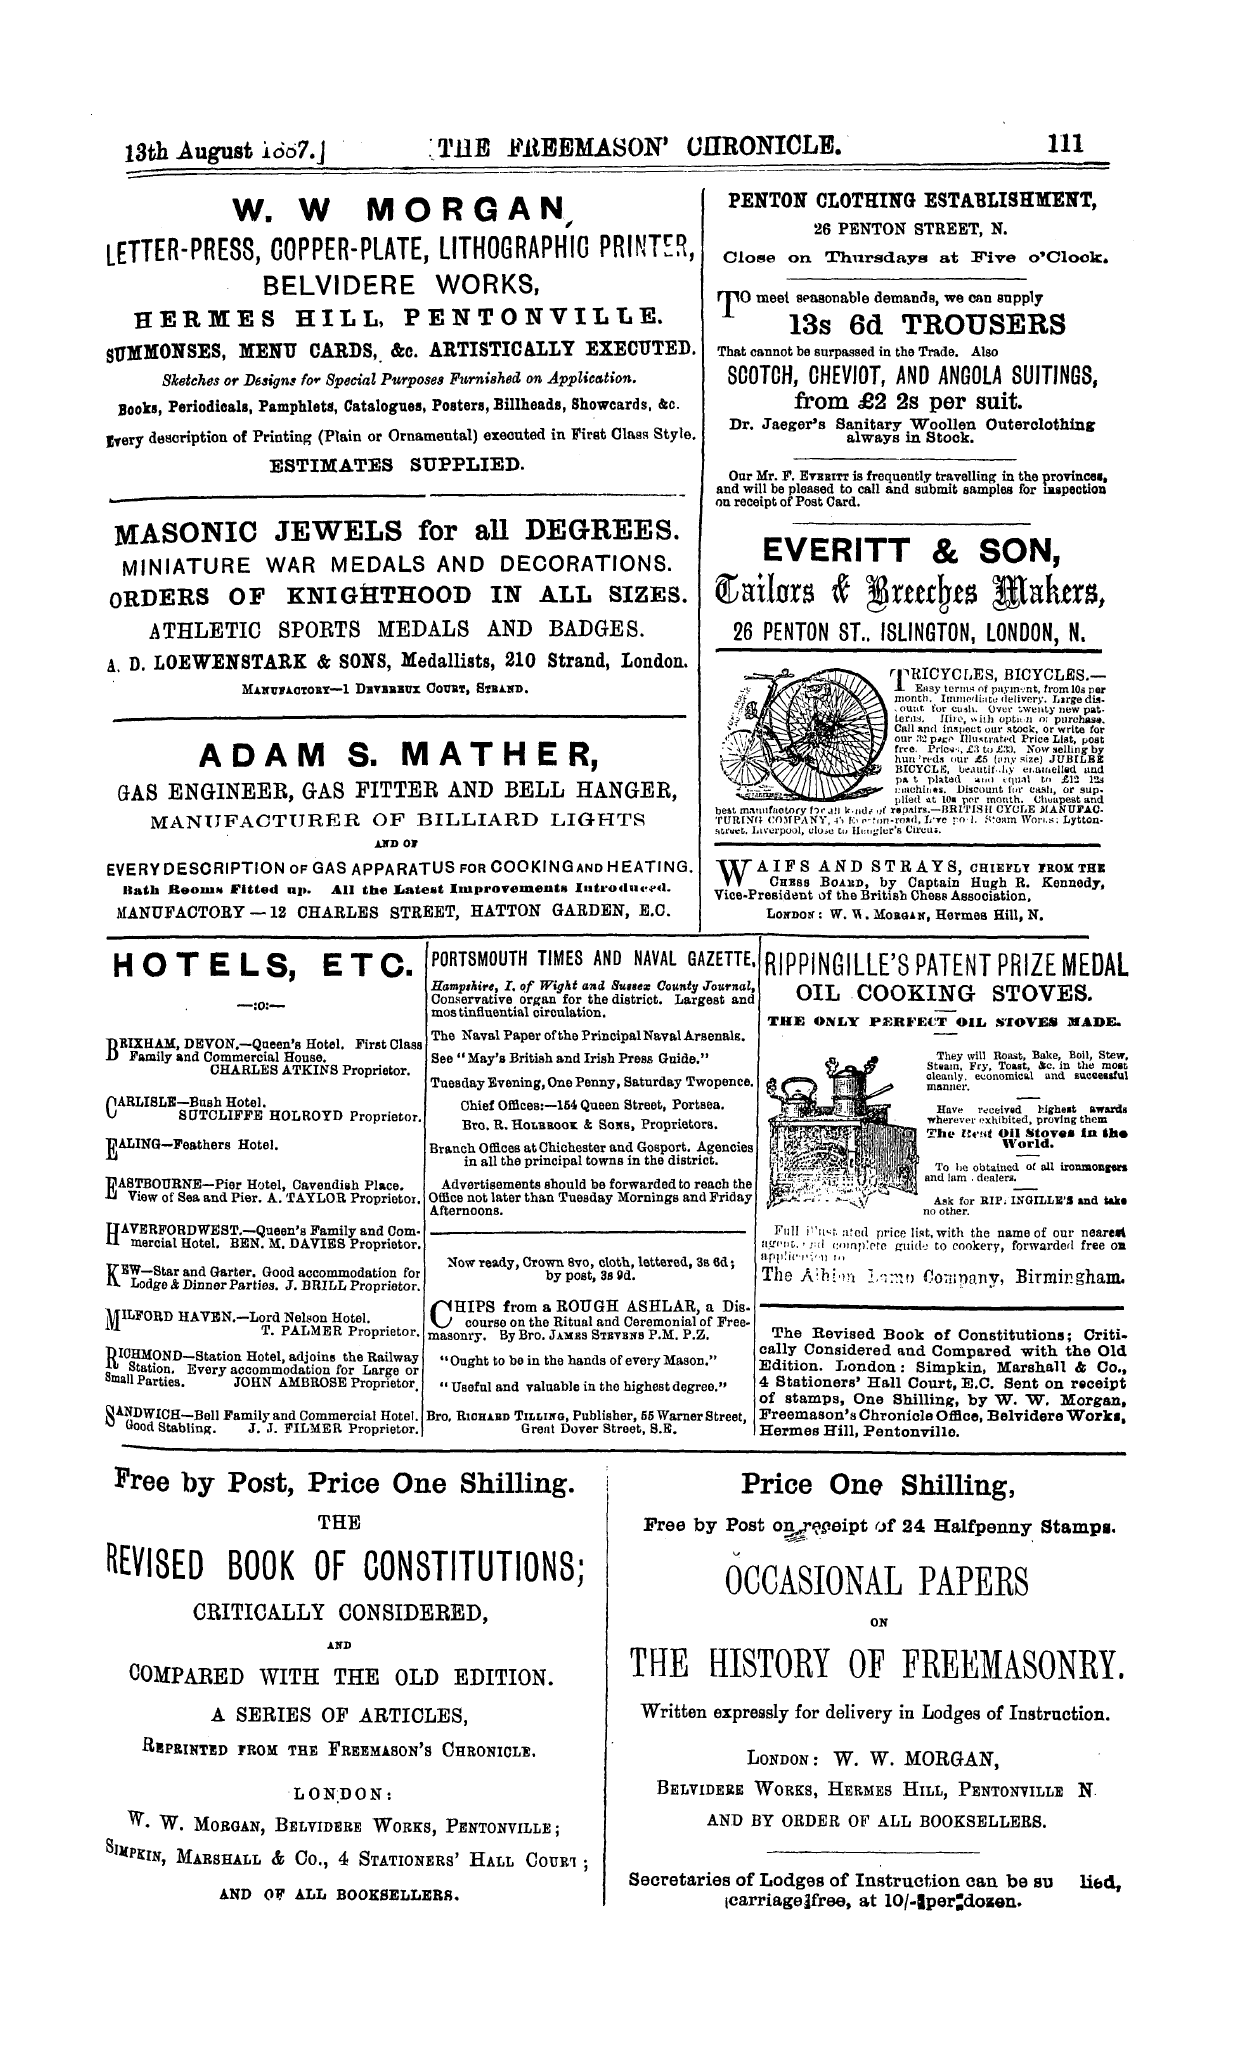 The Freemason's Chronicle: 1887-08-13 - Ad01510